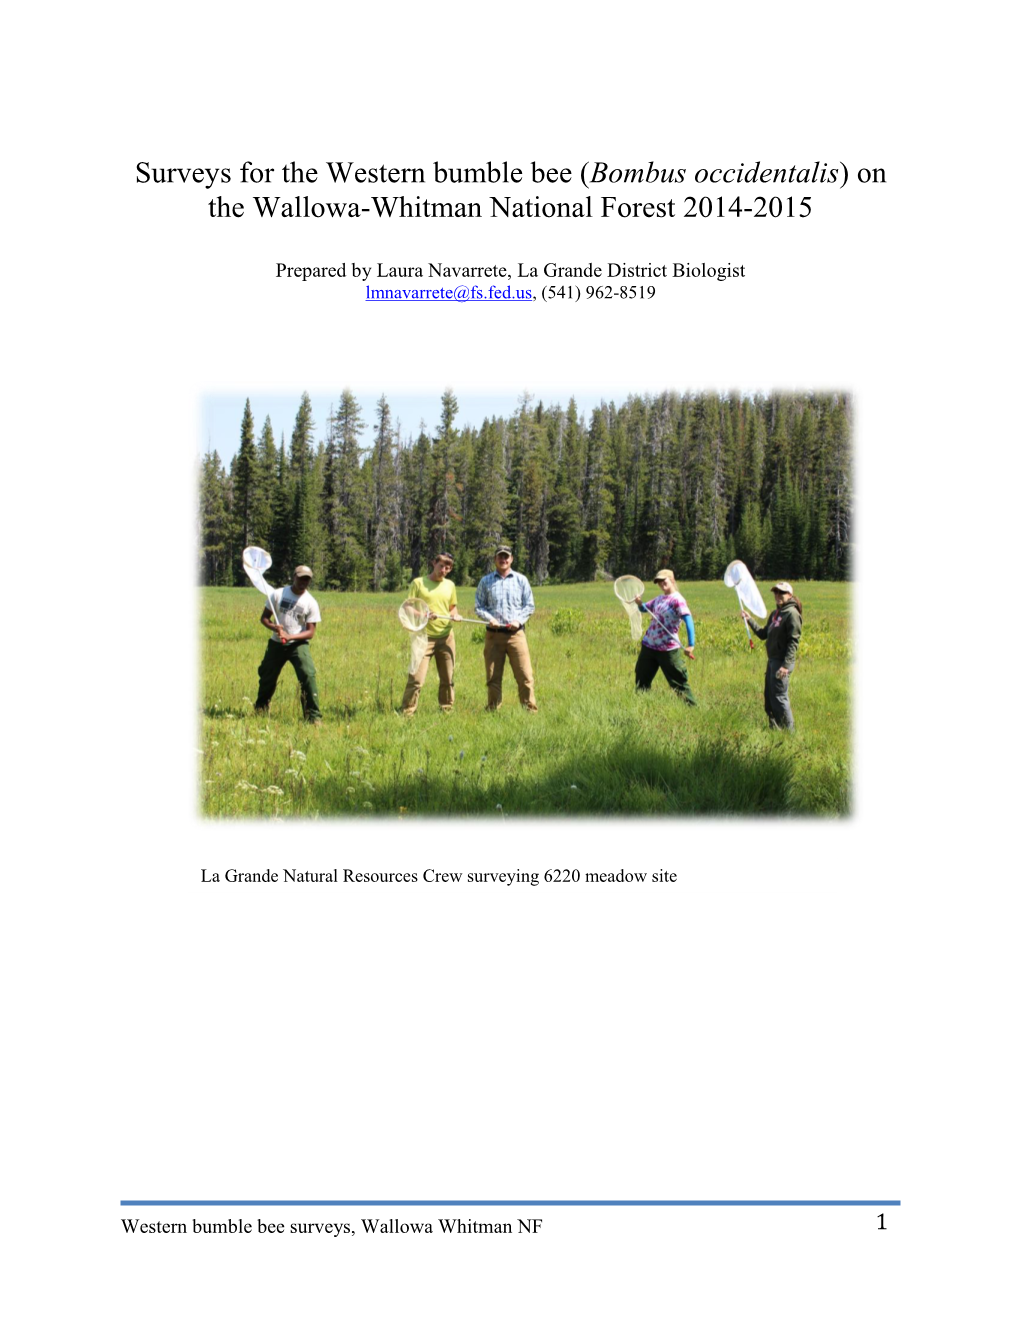 Bombus Occidentalis) on the Wallowa-Whitman National Forest 2014-2015